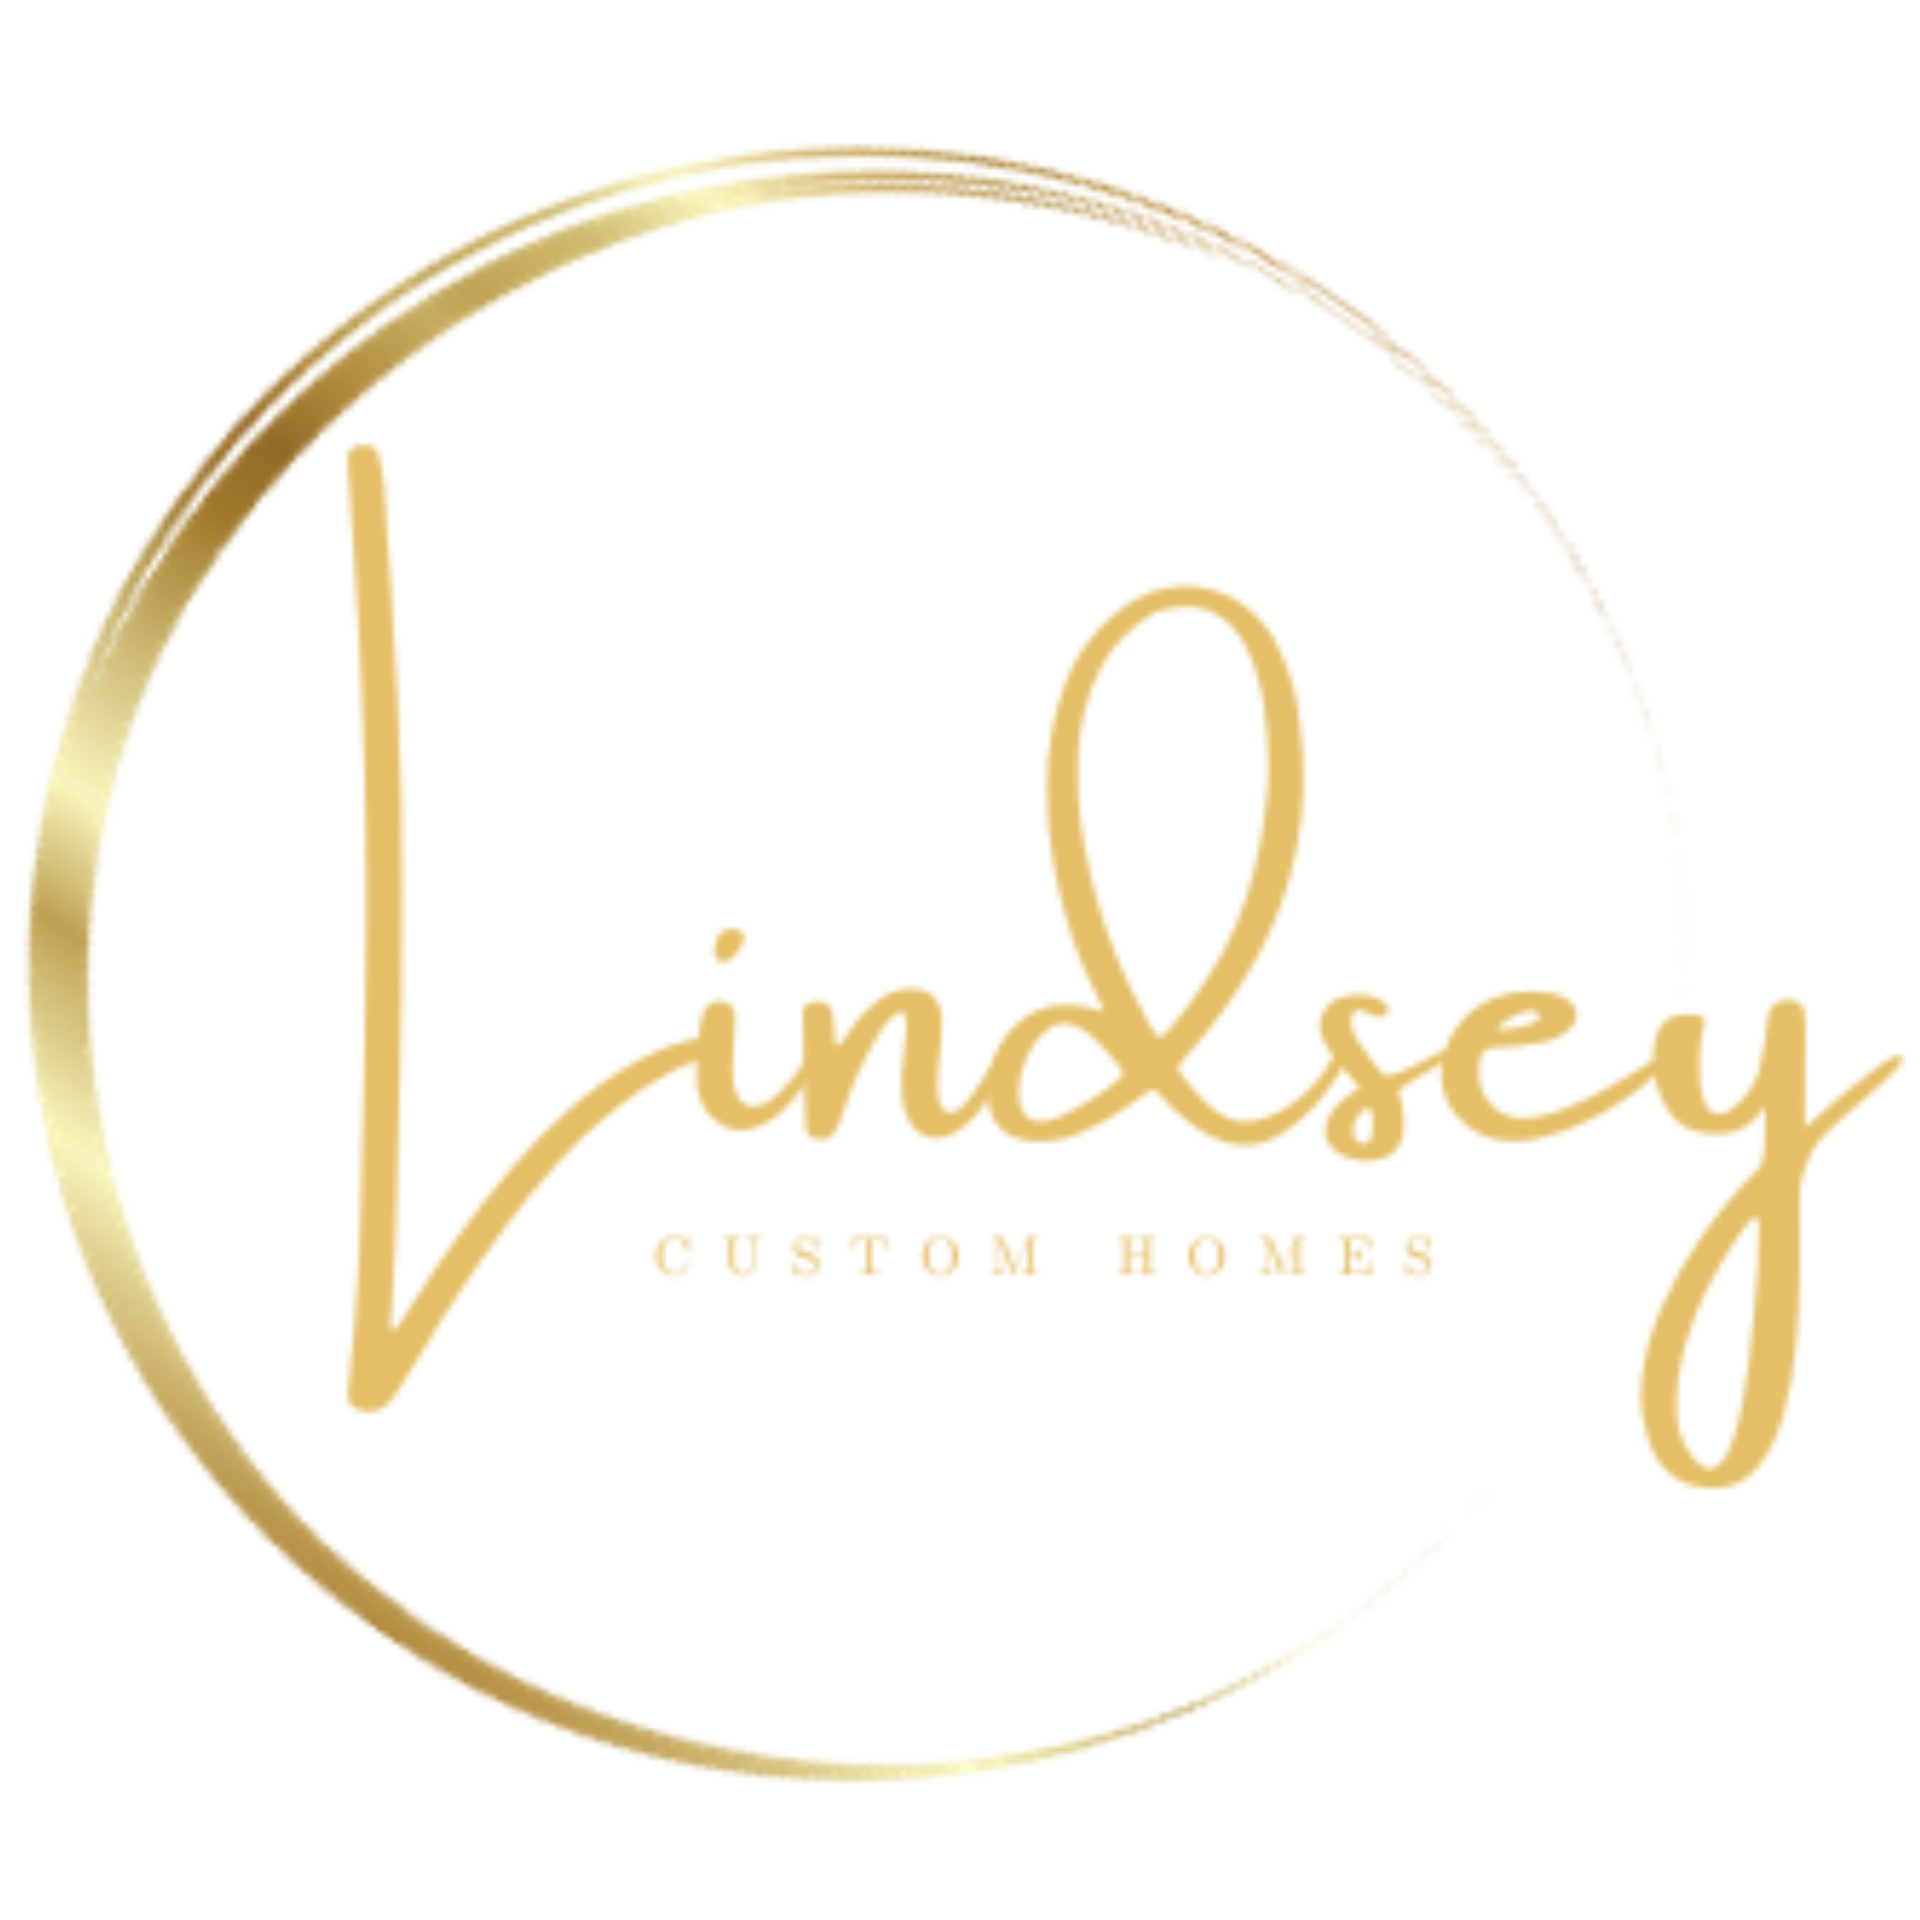 Lindsey custom homes edgewood tx logo